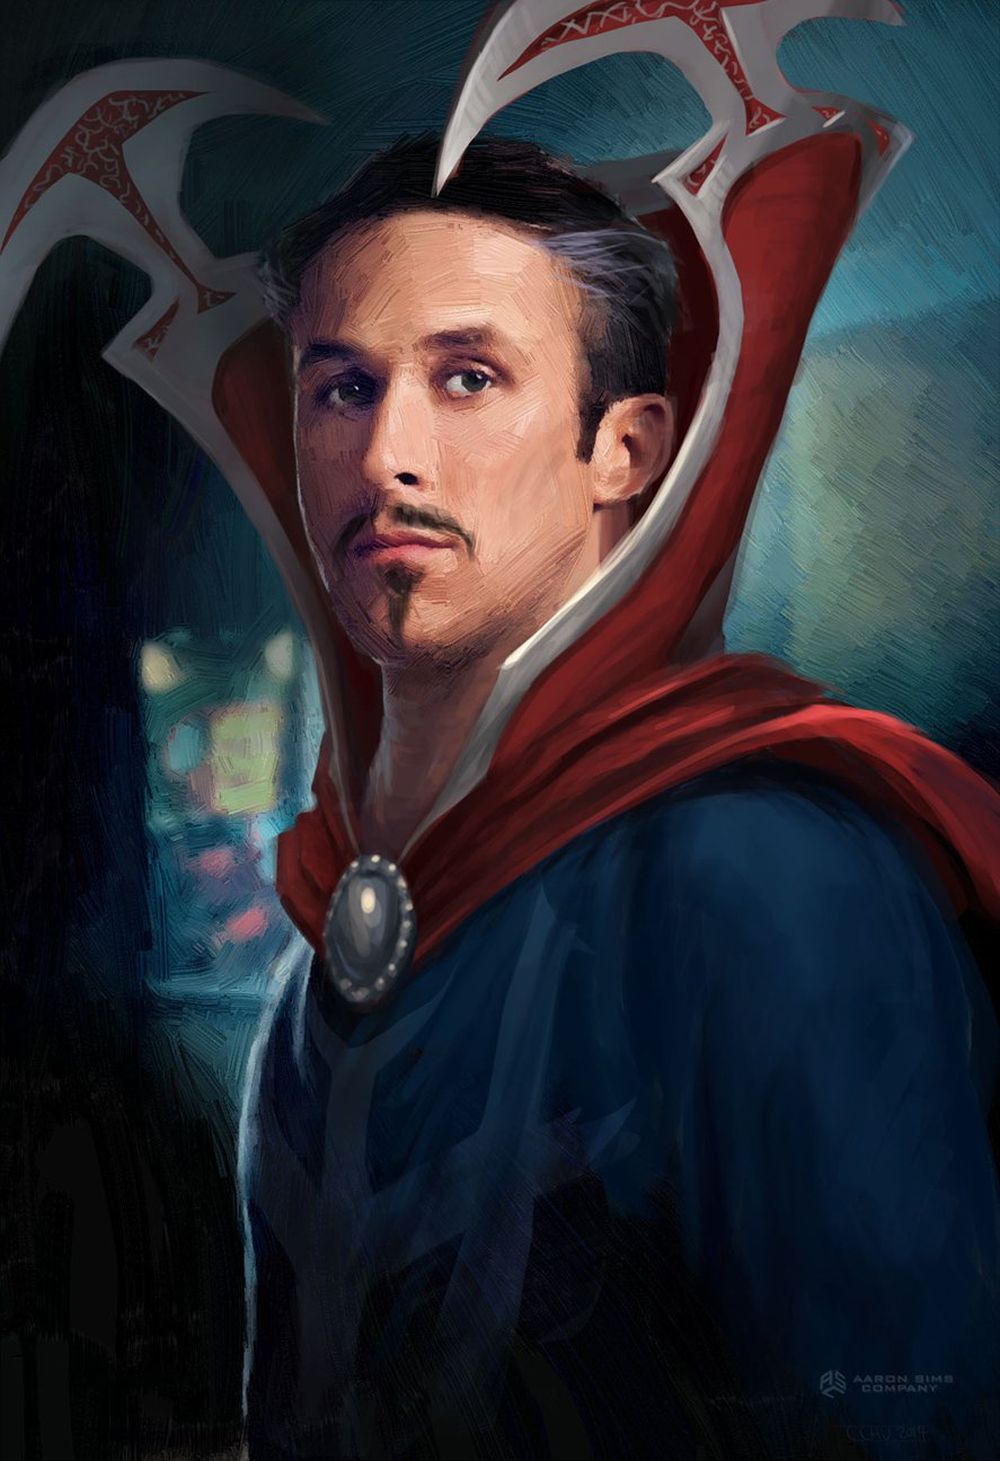 Ryan Gosling as Doctor Strange